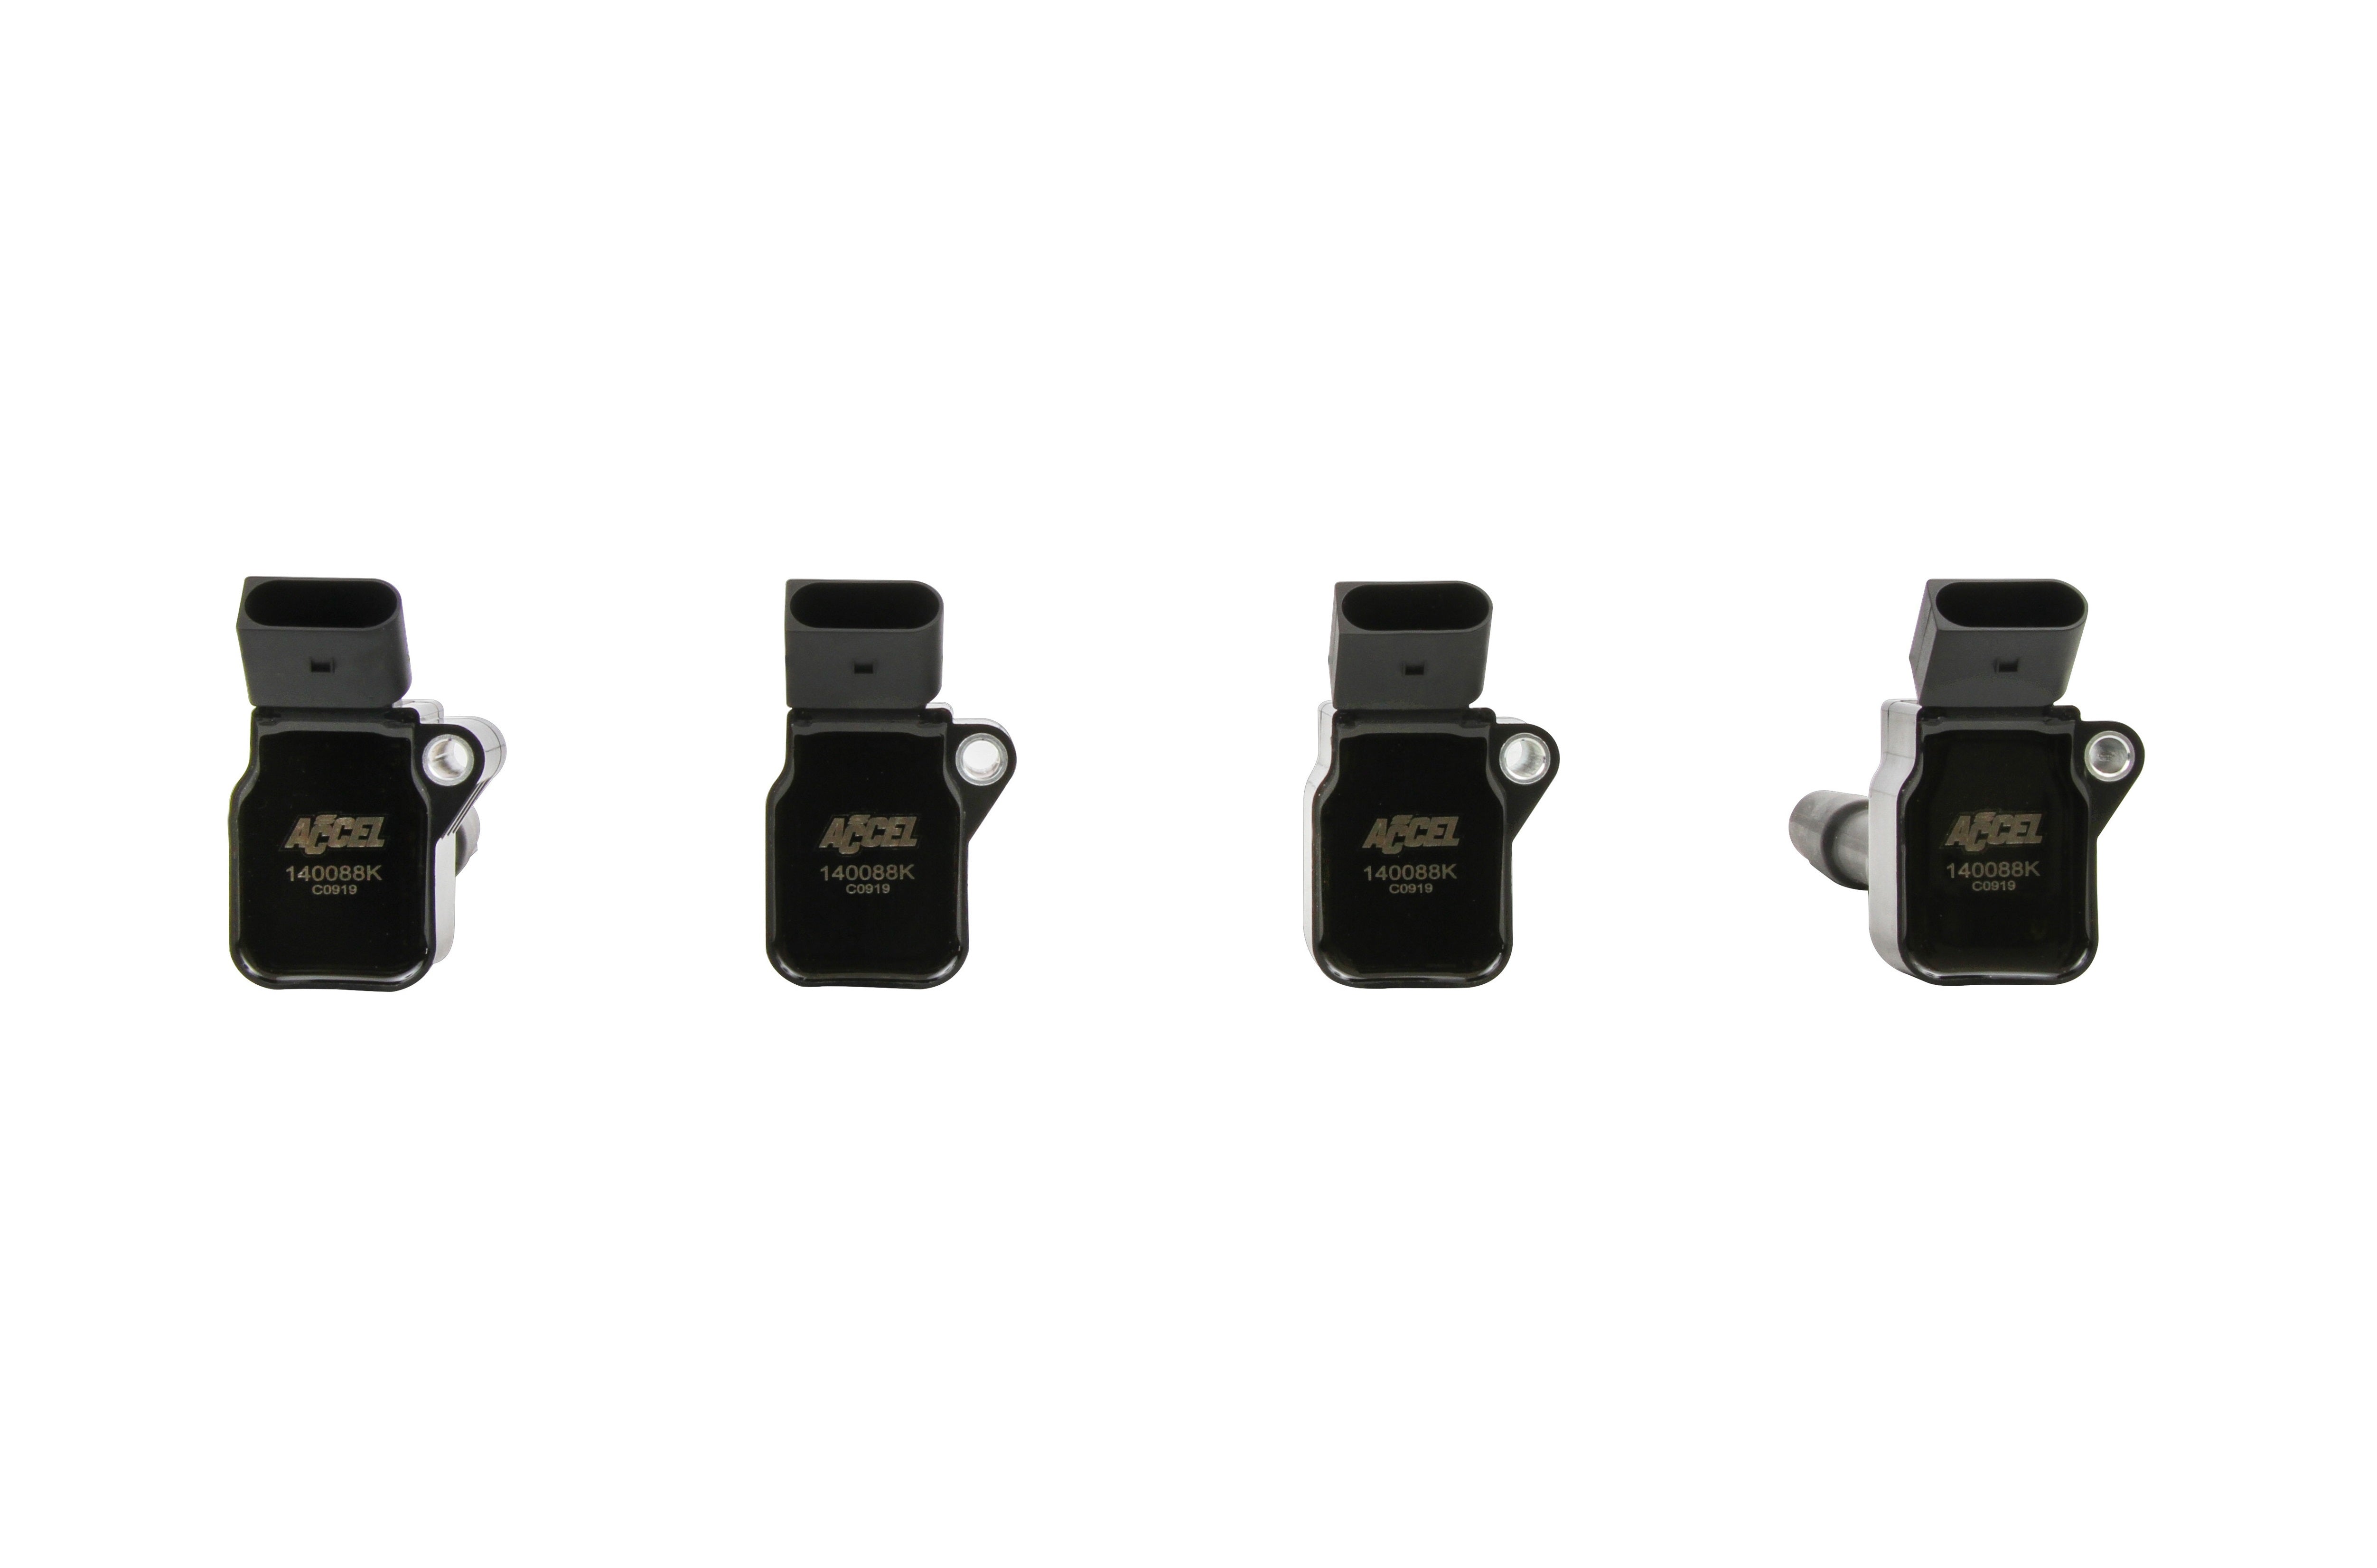 Accel Ignition Coil Pack For Audi/VW 1.8T & 2.0T (Black) - Set Of 4